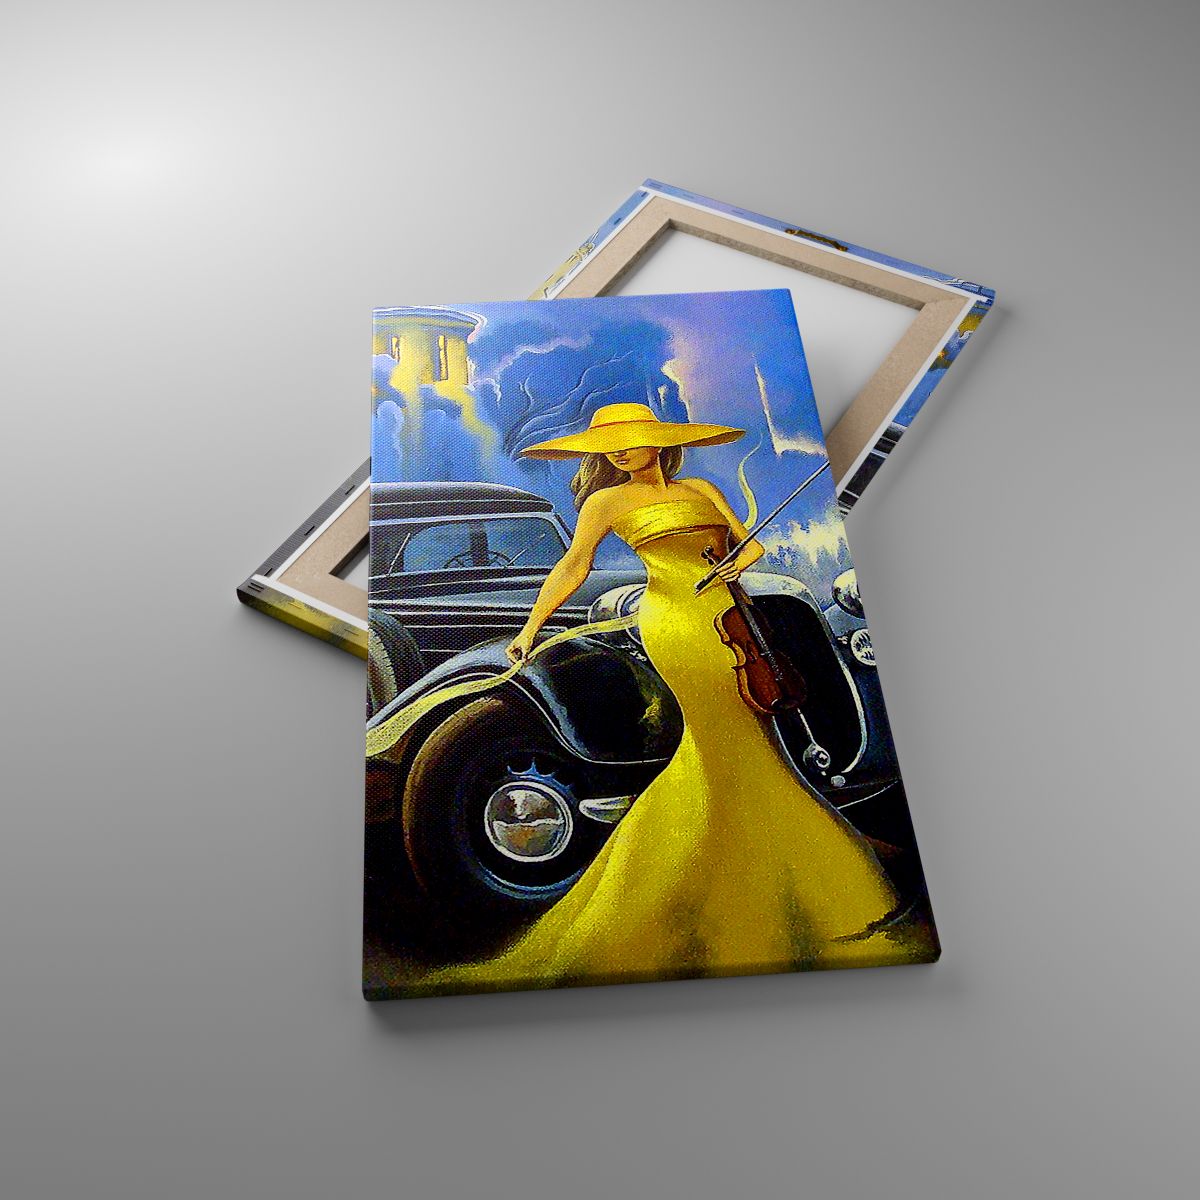 Leinwandbild Retro-Auto, Leinwandbild Frau Mit Hut, Leinwandbild Palast, Leinwandbild Mode, Leinwandbild Kunst